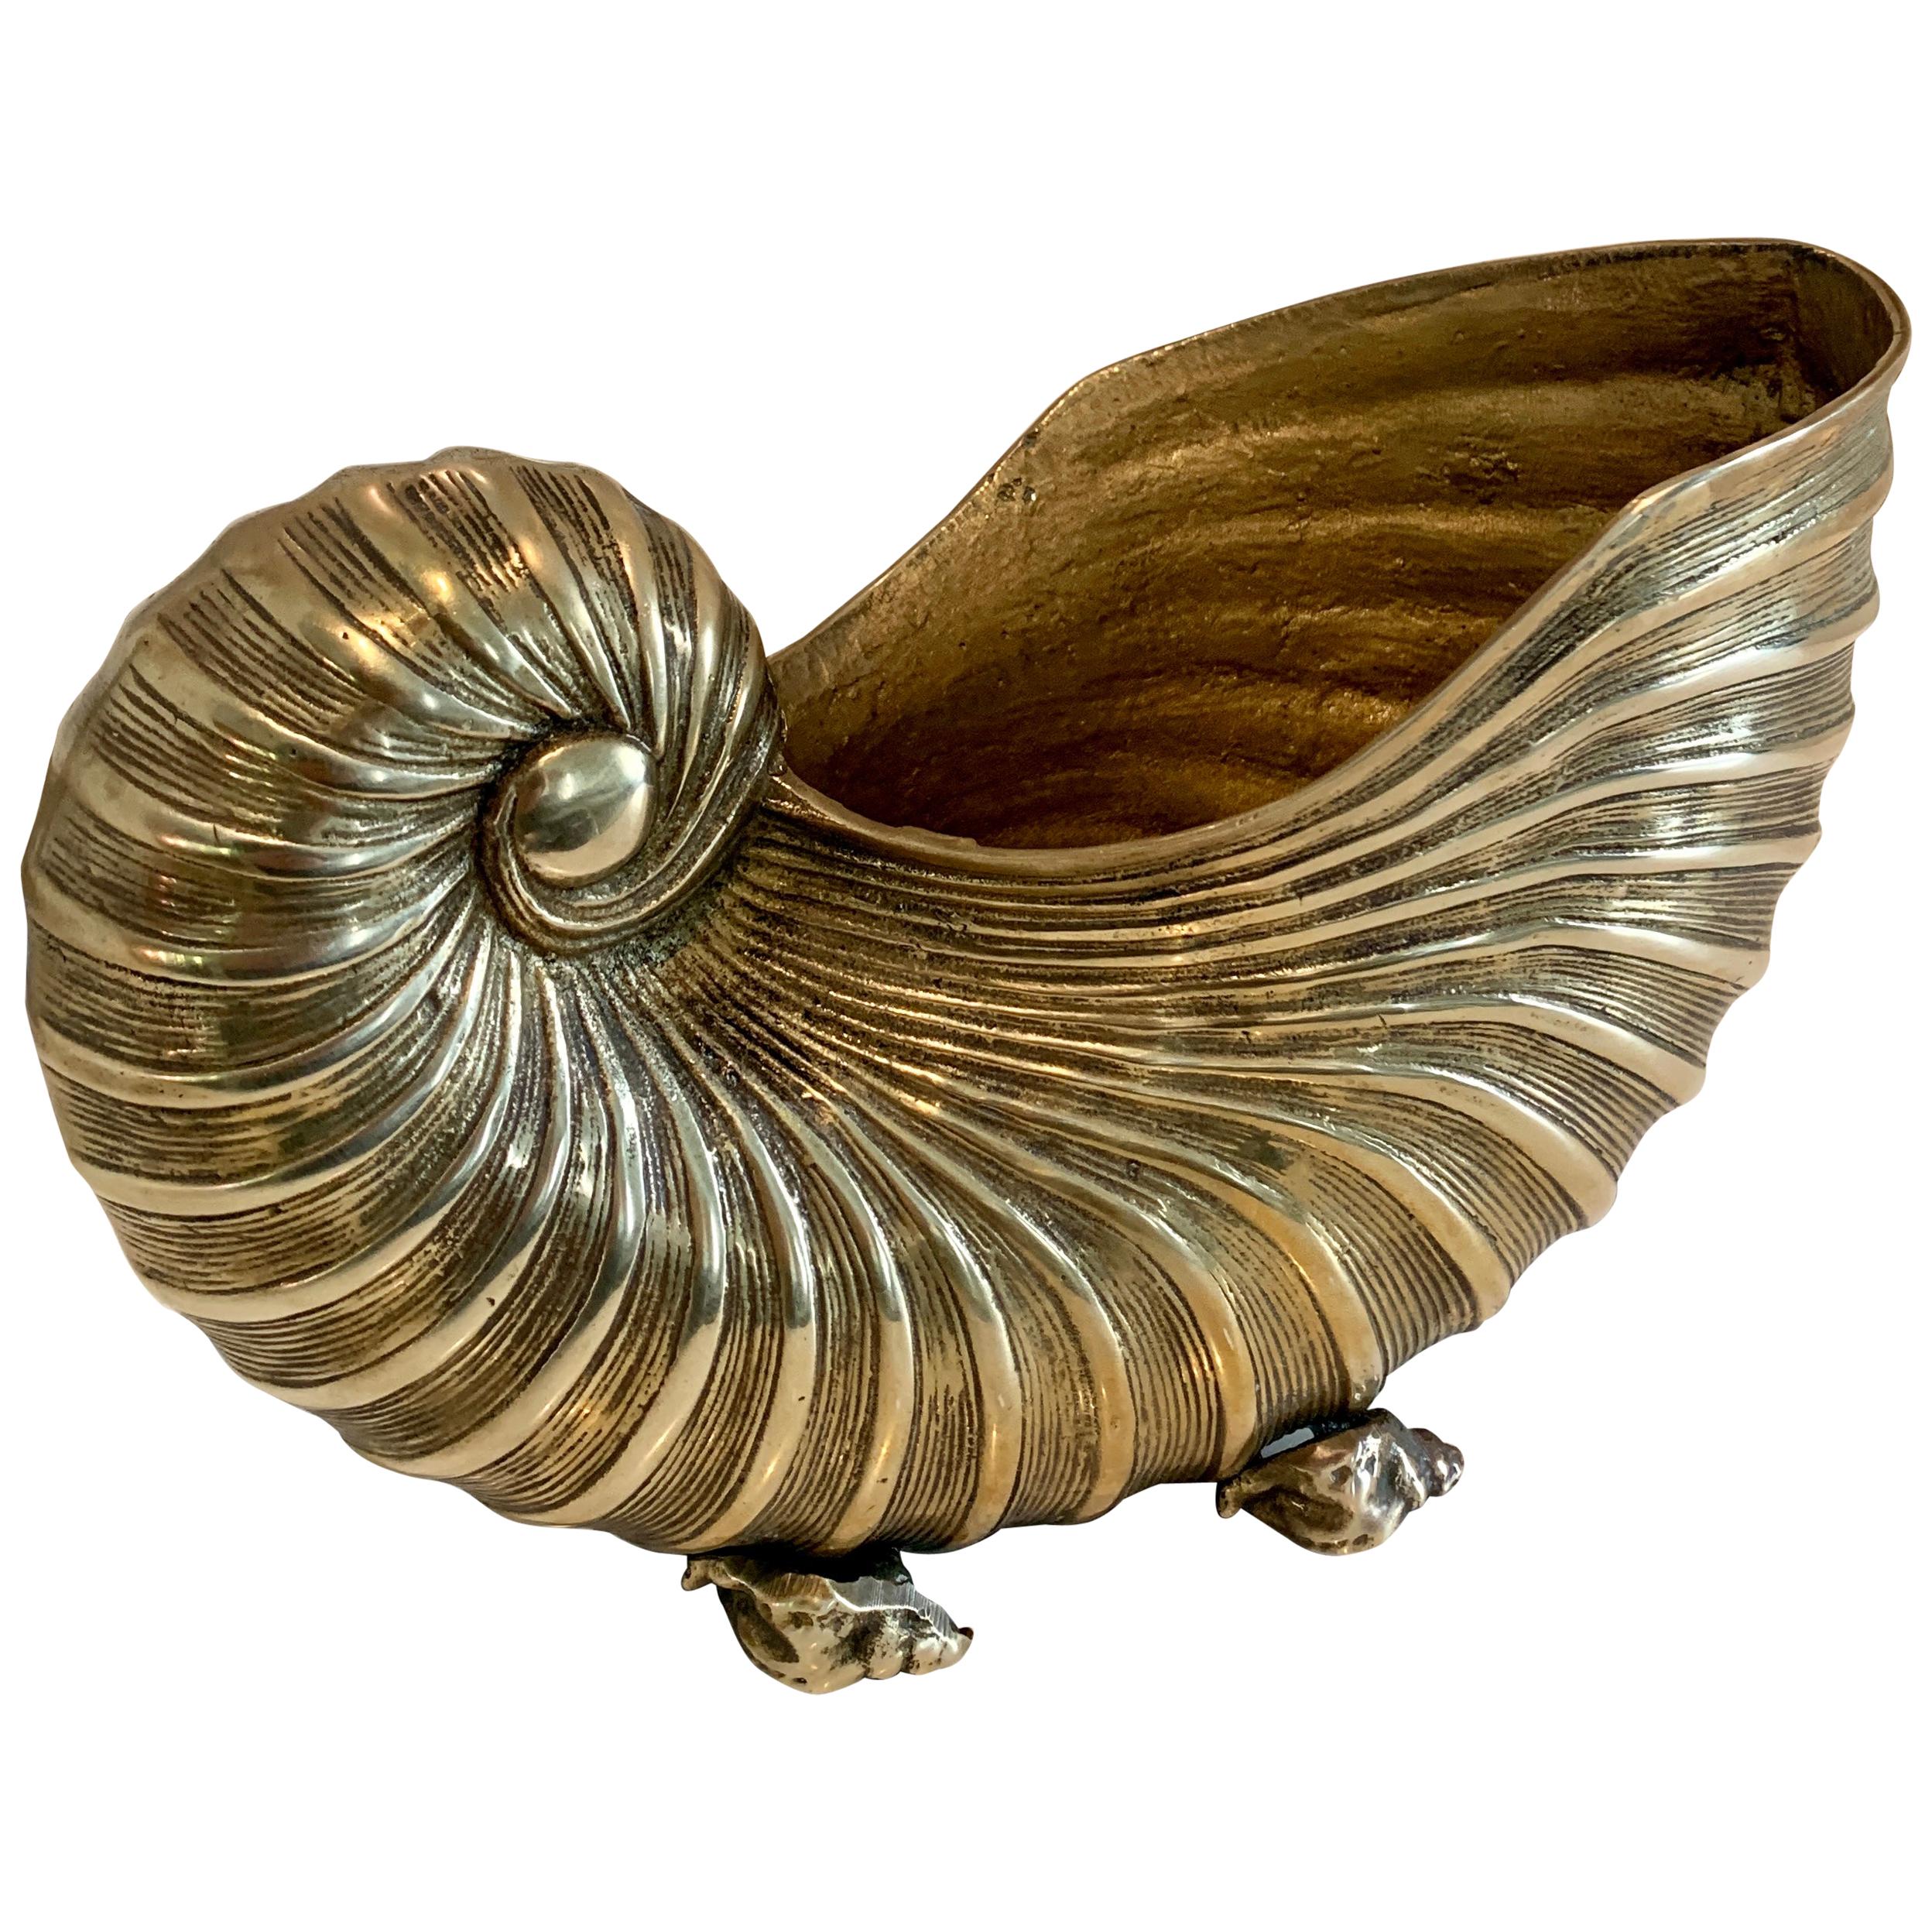 Brass Nautilus Shell Planter Cachepot with Shell Feet Details